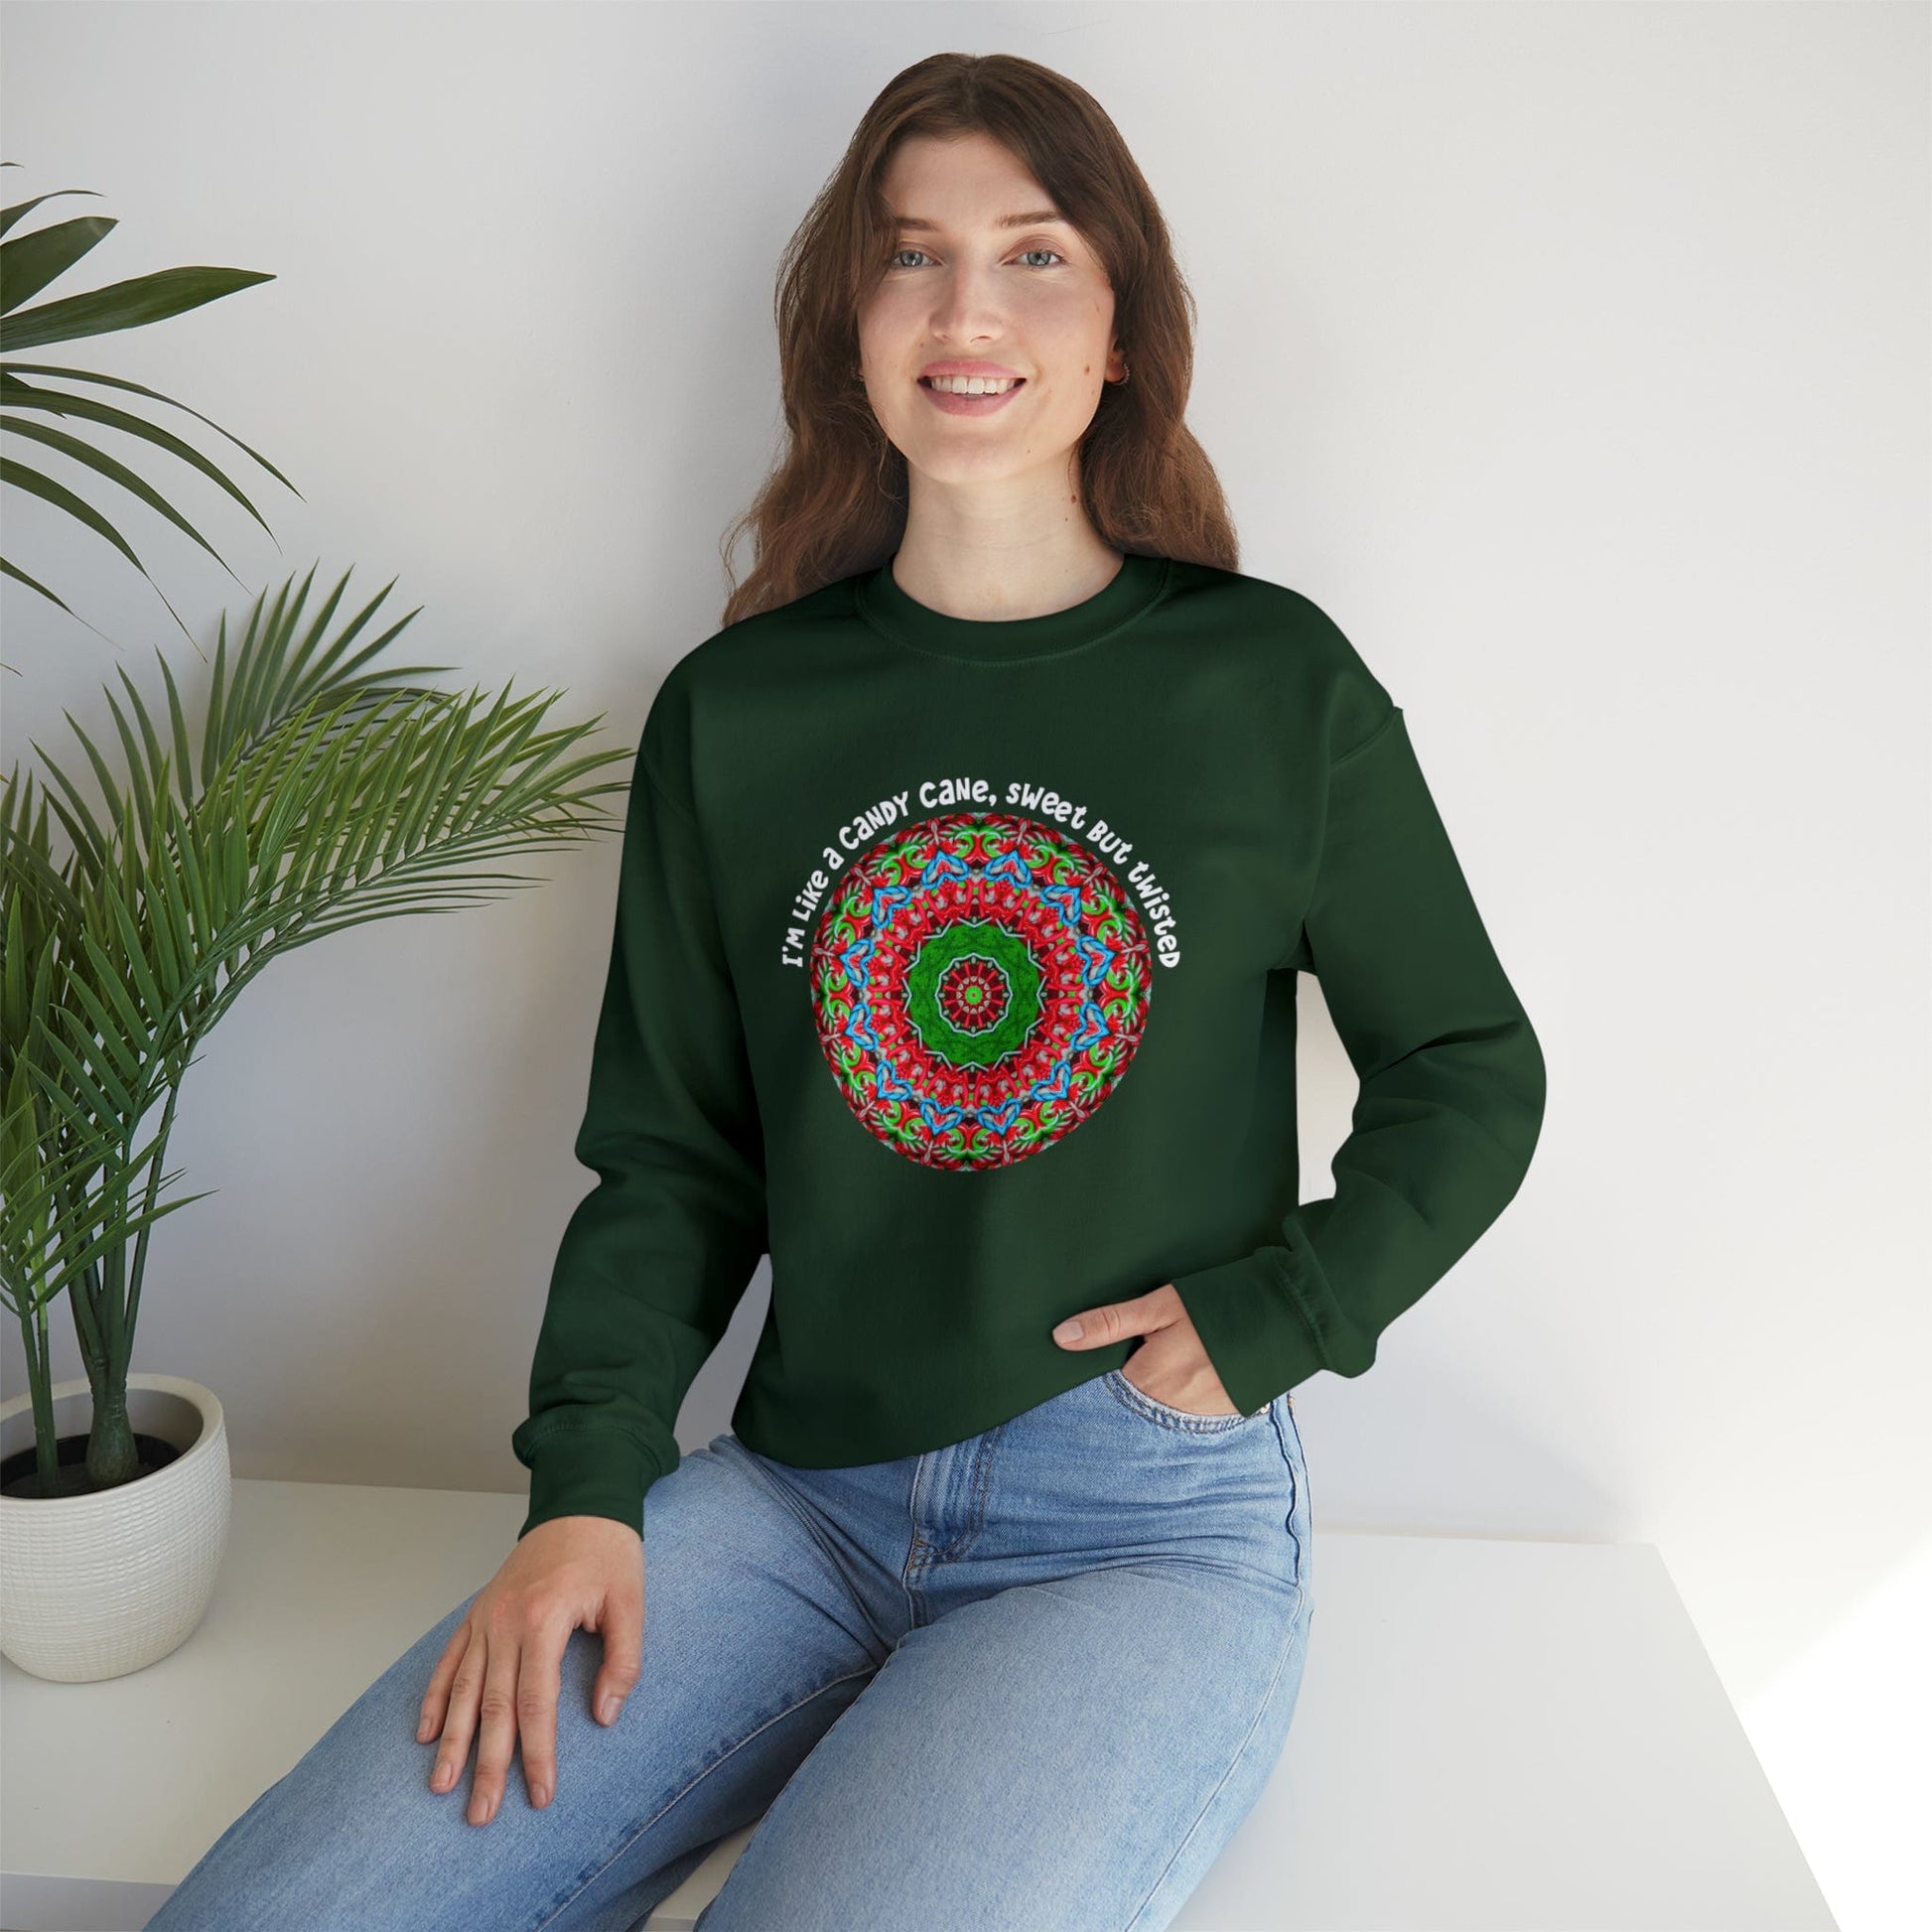 Cute & Funny Christmas Sweatshirt, Sarcastic Candy Cane Mandala Art Shirt, Im like a candy cane sweet but twisted FOREST GREEN